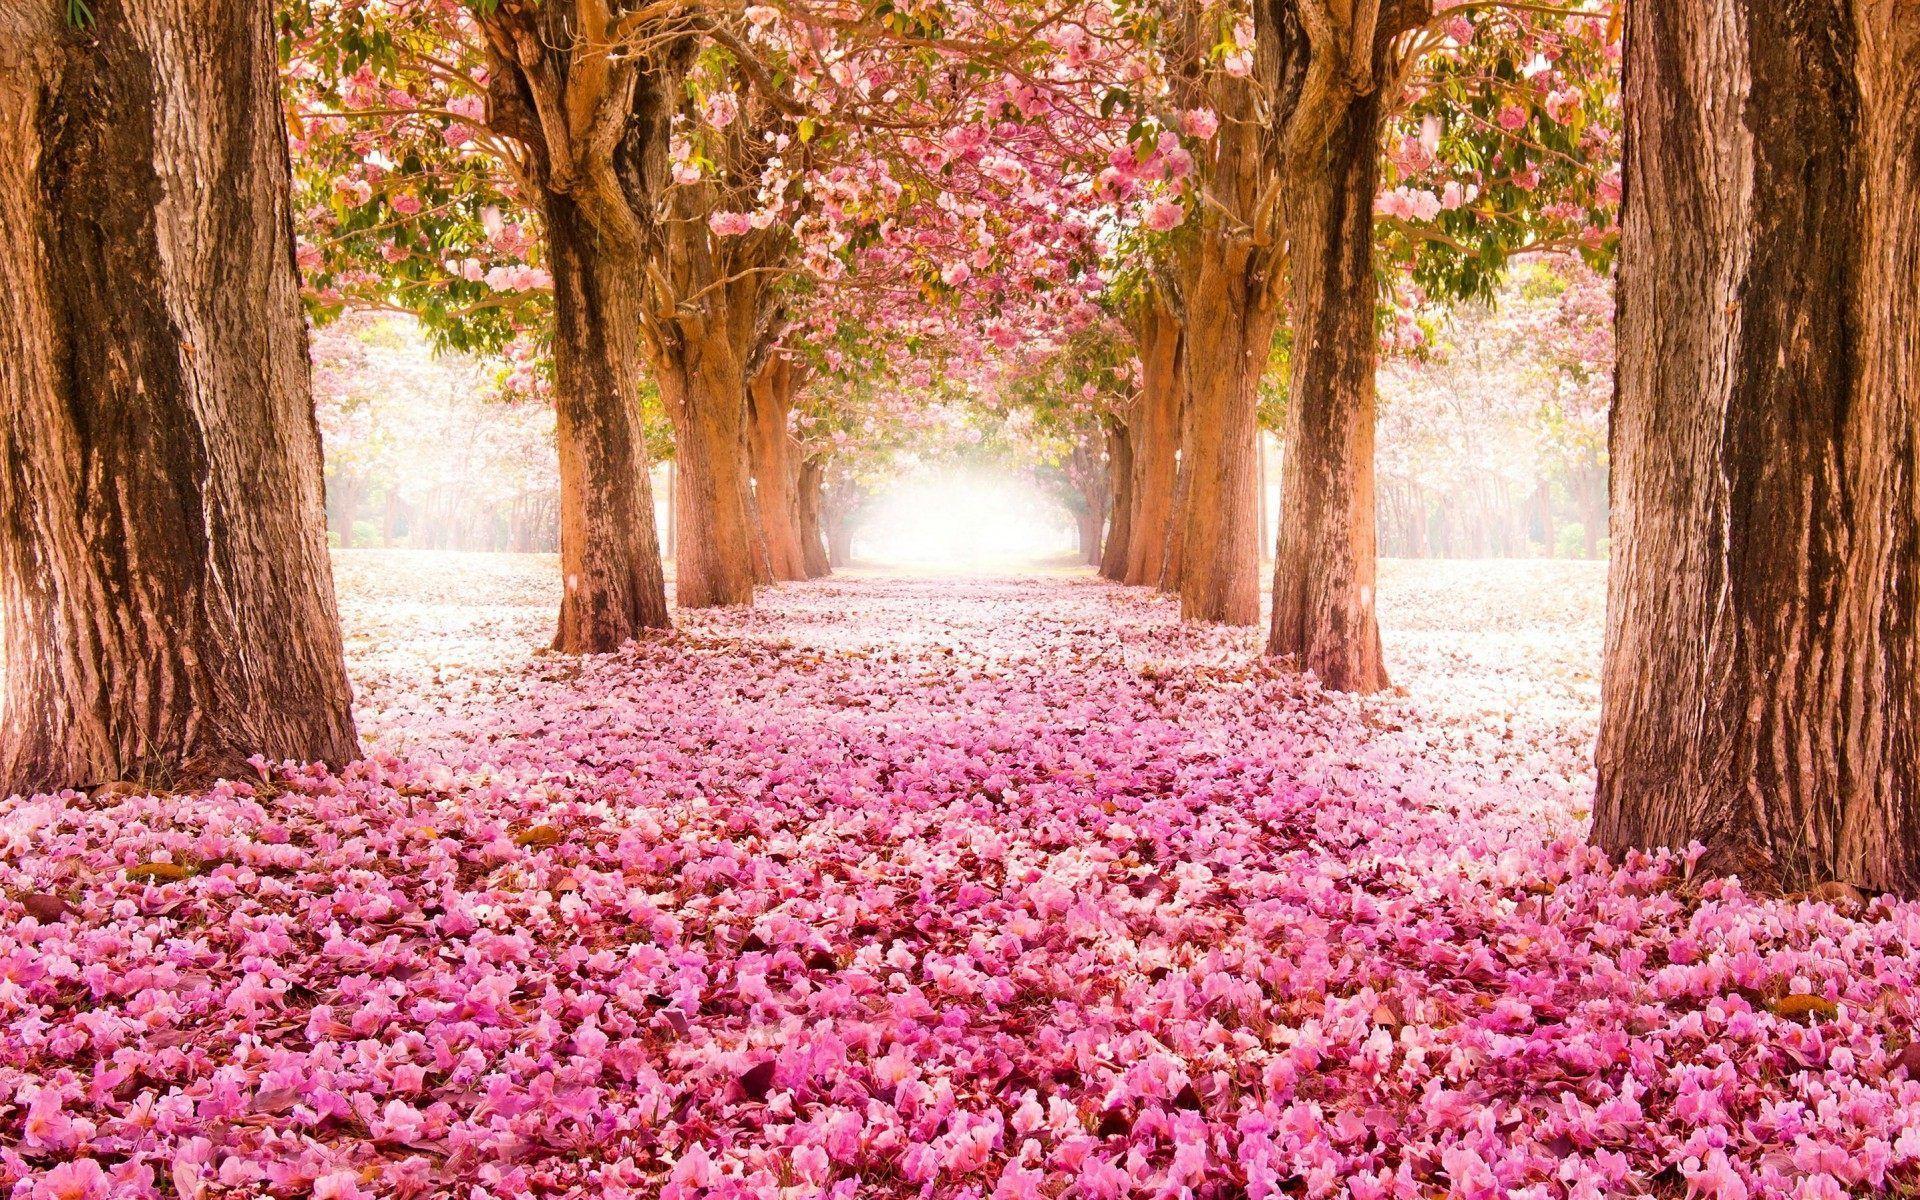 Spring flowers wallpaper HD. Wallpaper, Background, Image. Cherry blossom wallpaper, Spring wallpaper, Tree tunnel